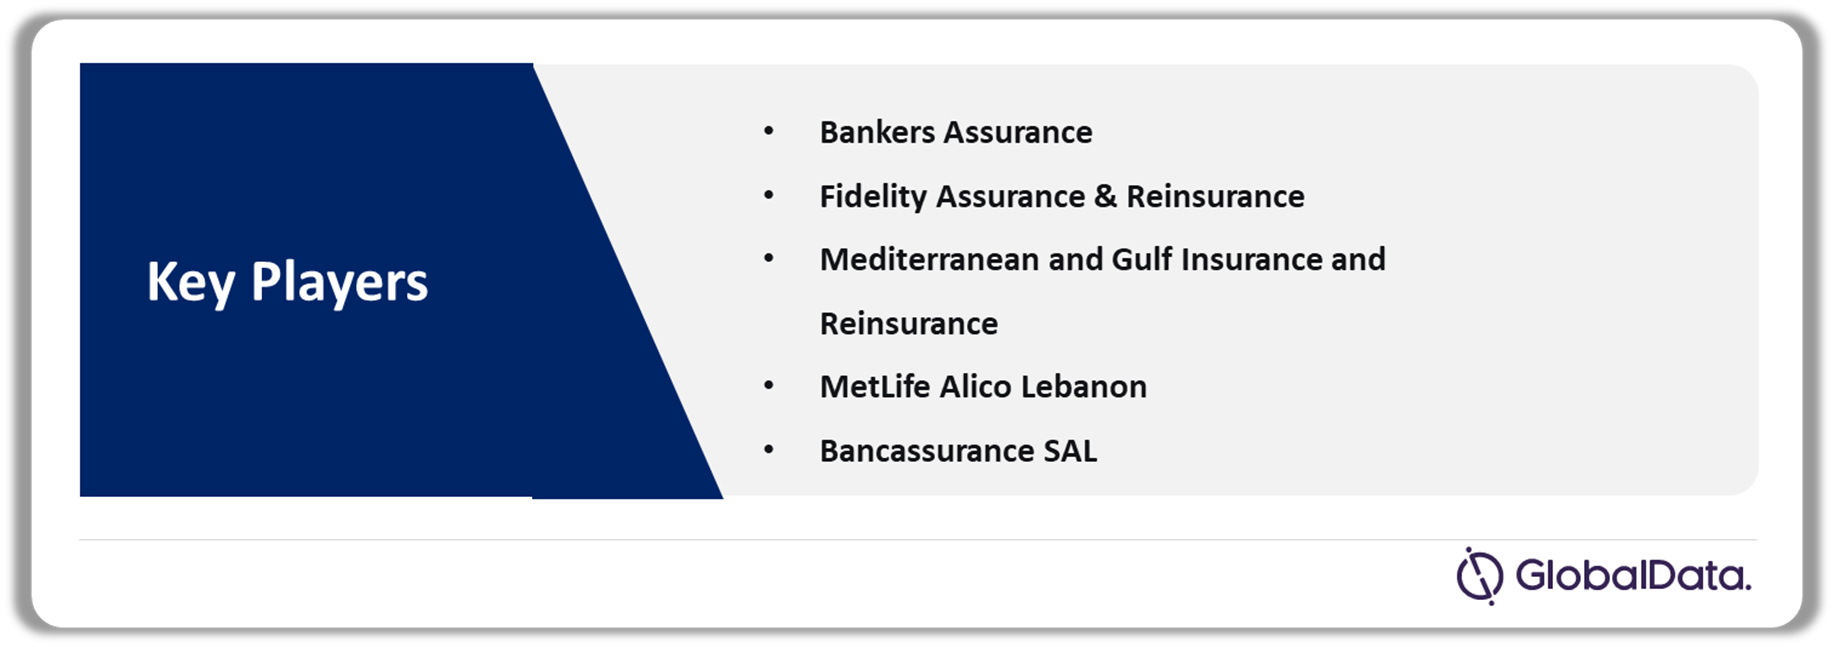 Lebanon Life Insurance Market Analysis by Companies, 2022(%)